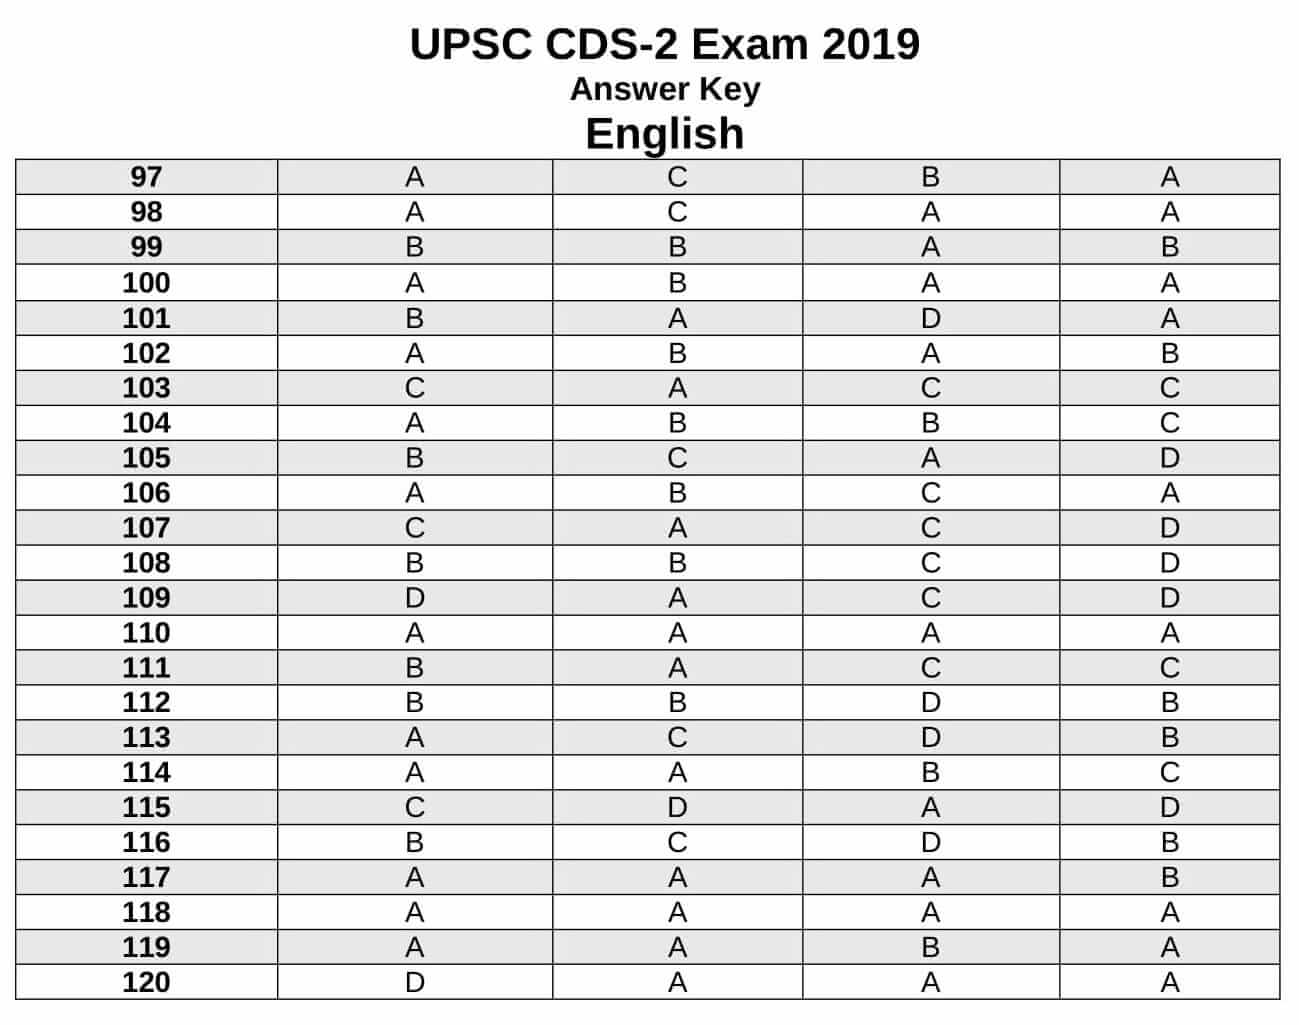 UPSC CDS 2 English Question Paper Answer Key 2019 PDF.